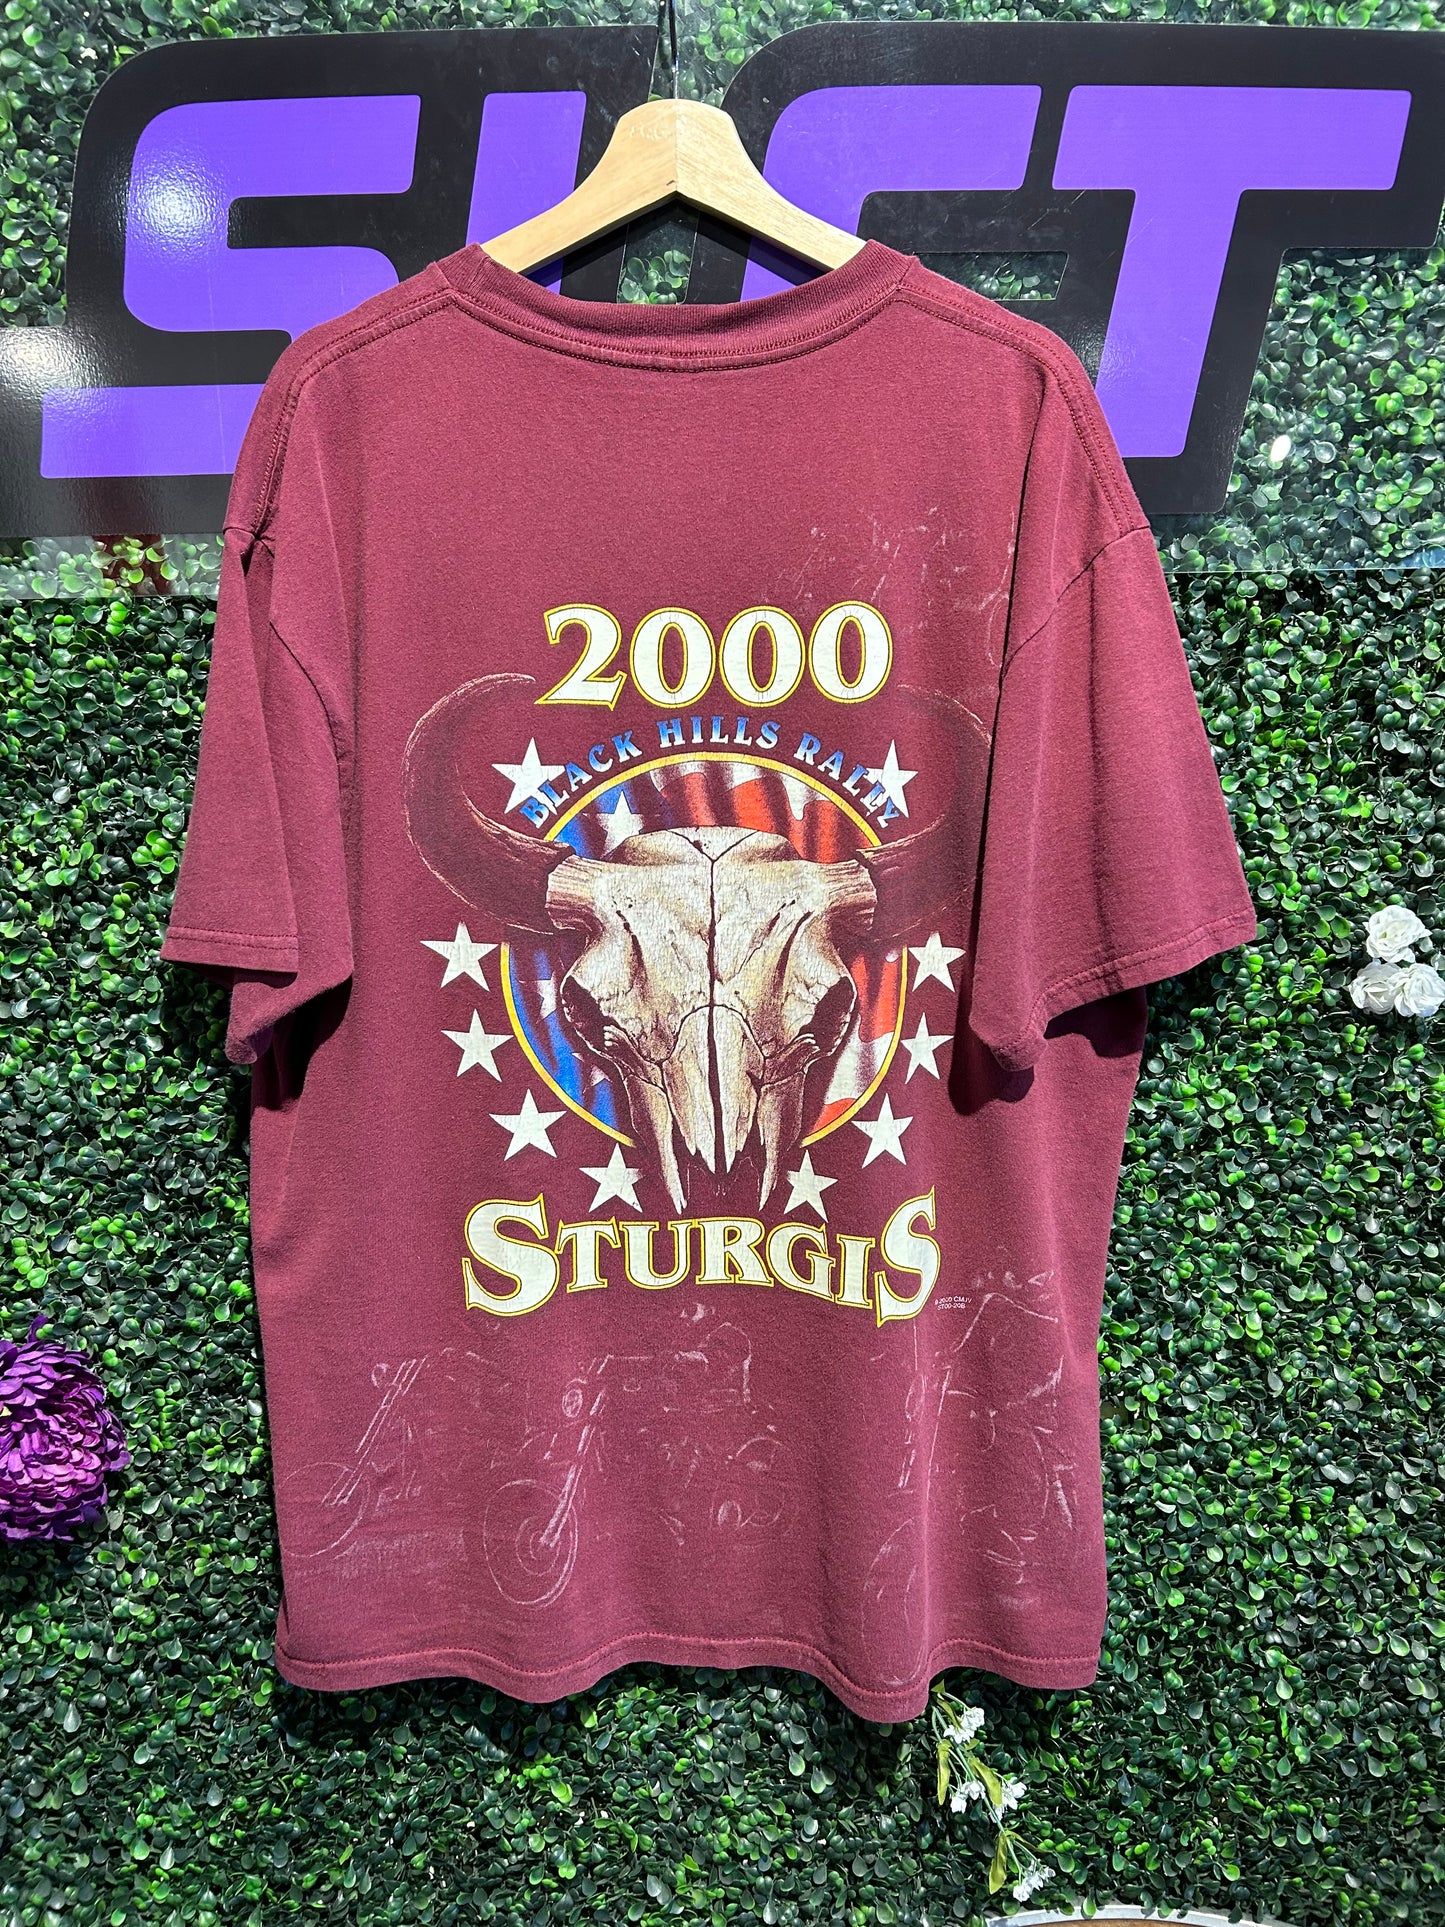 2000 Sturgis Black Hills Rally Follow The Dream Wolf T-Shirt. Size XL